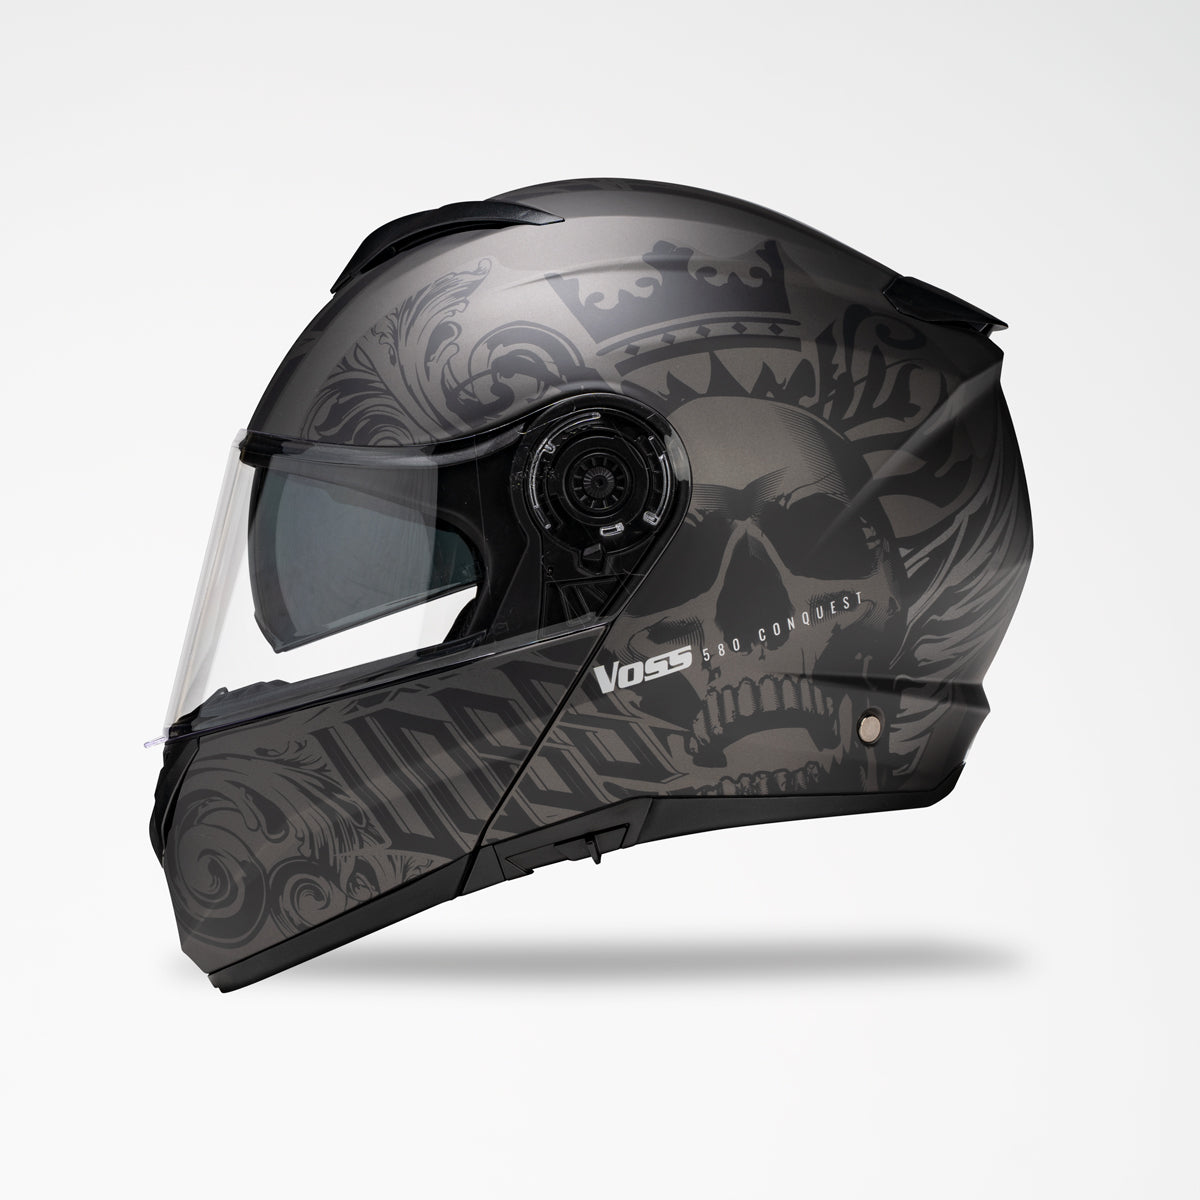 VOSS 580 CONQUEST TWO TONE APOCALYPSE HELMET - Voss Helmets